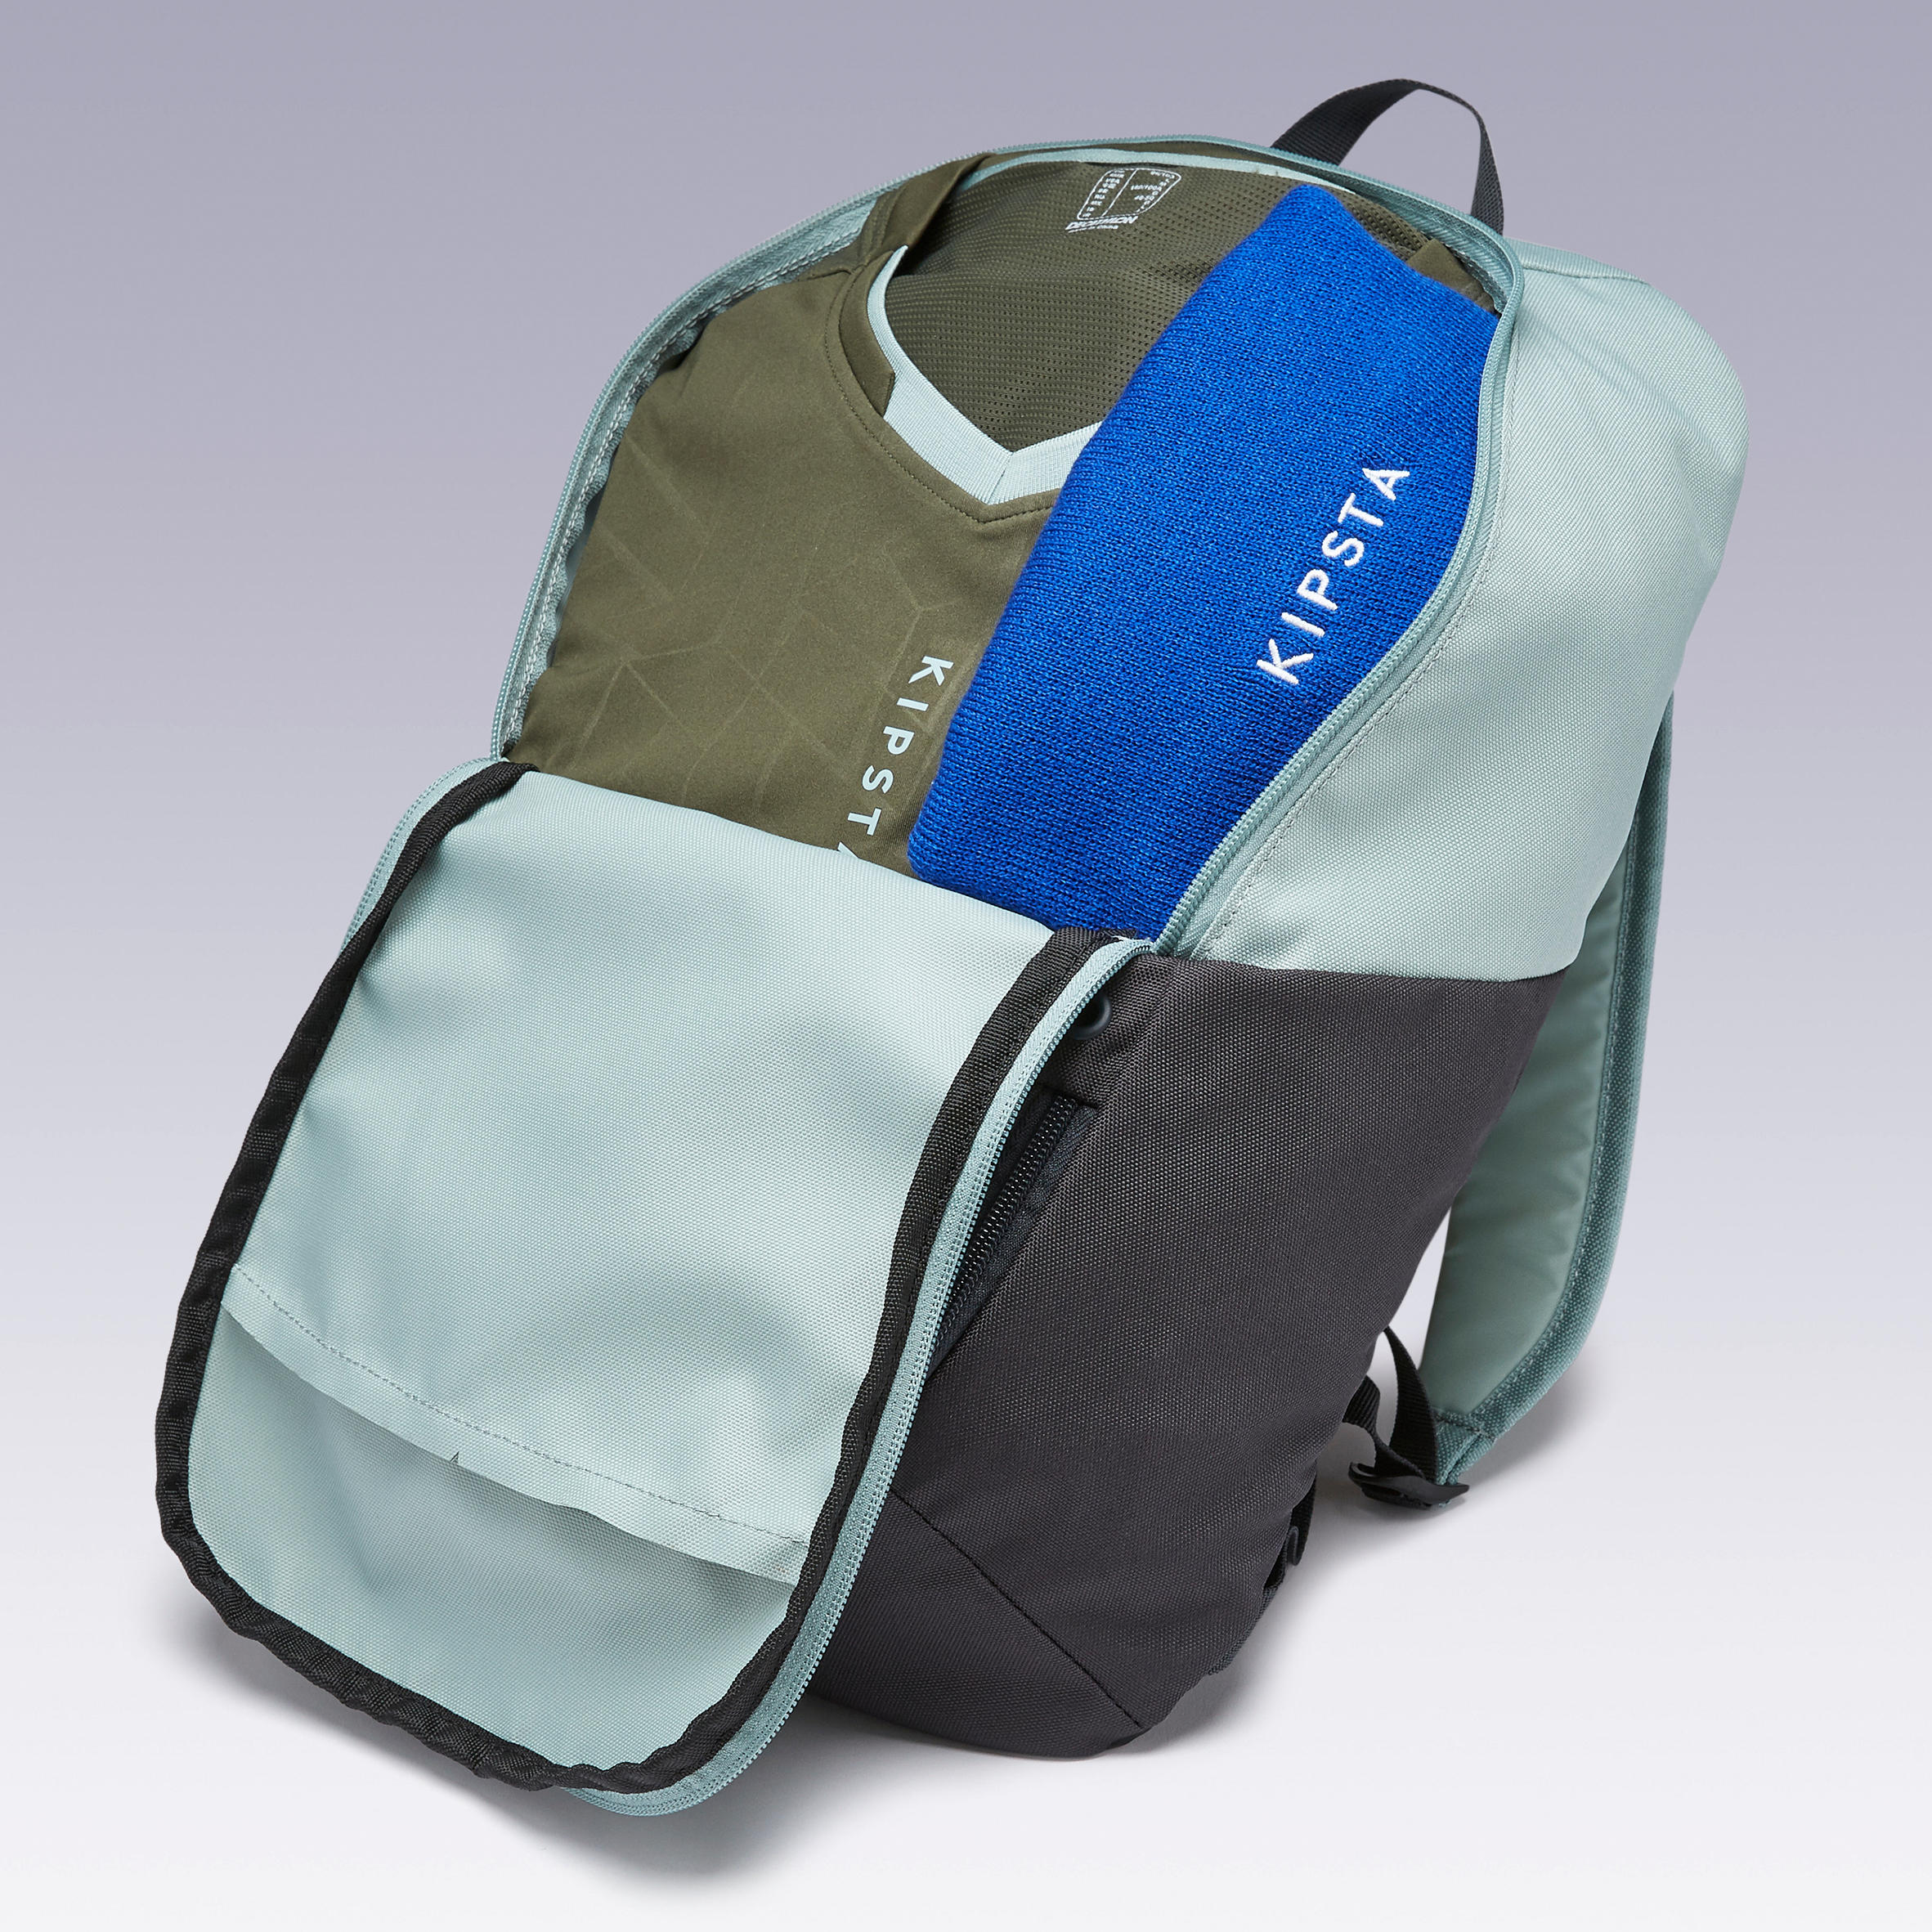 Kipsta Blue Kipocket Sports Duffle Bag at Rs 699 | कैजुअल डफल बैग in  Bengaluru | ID: 23636265997